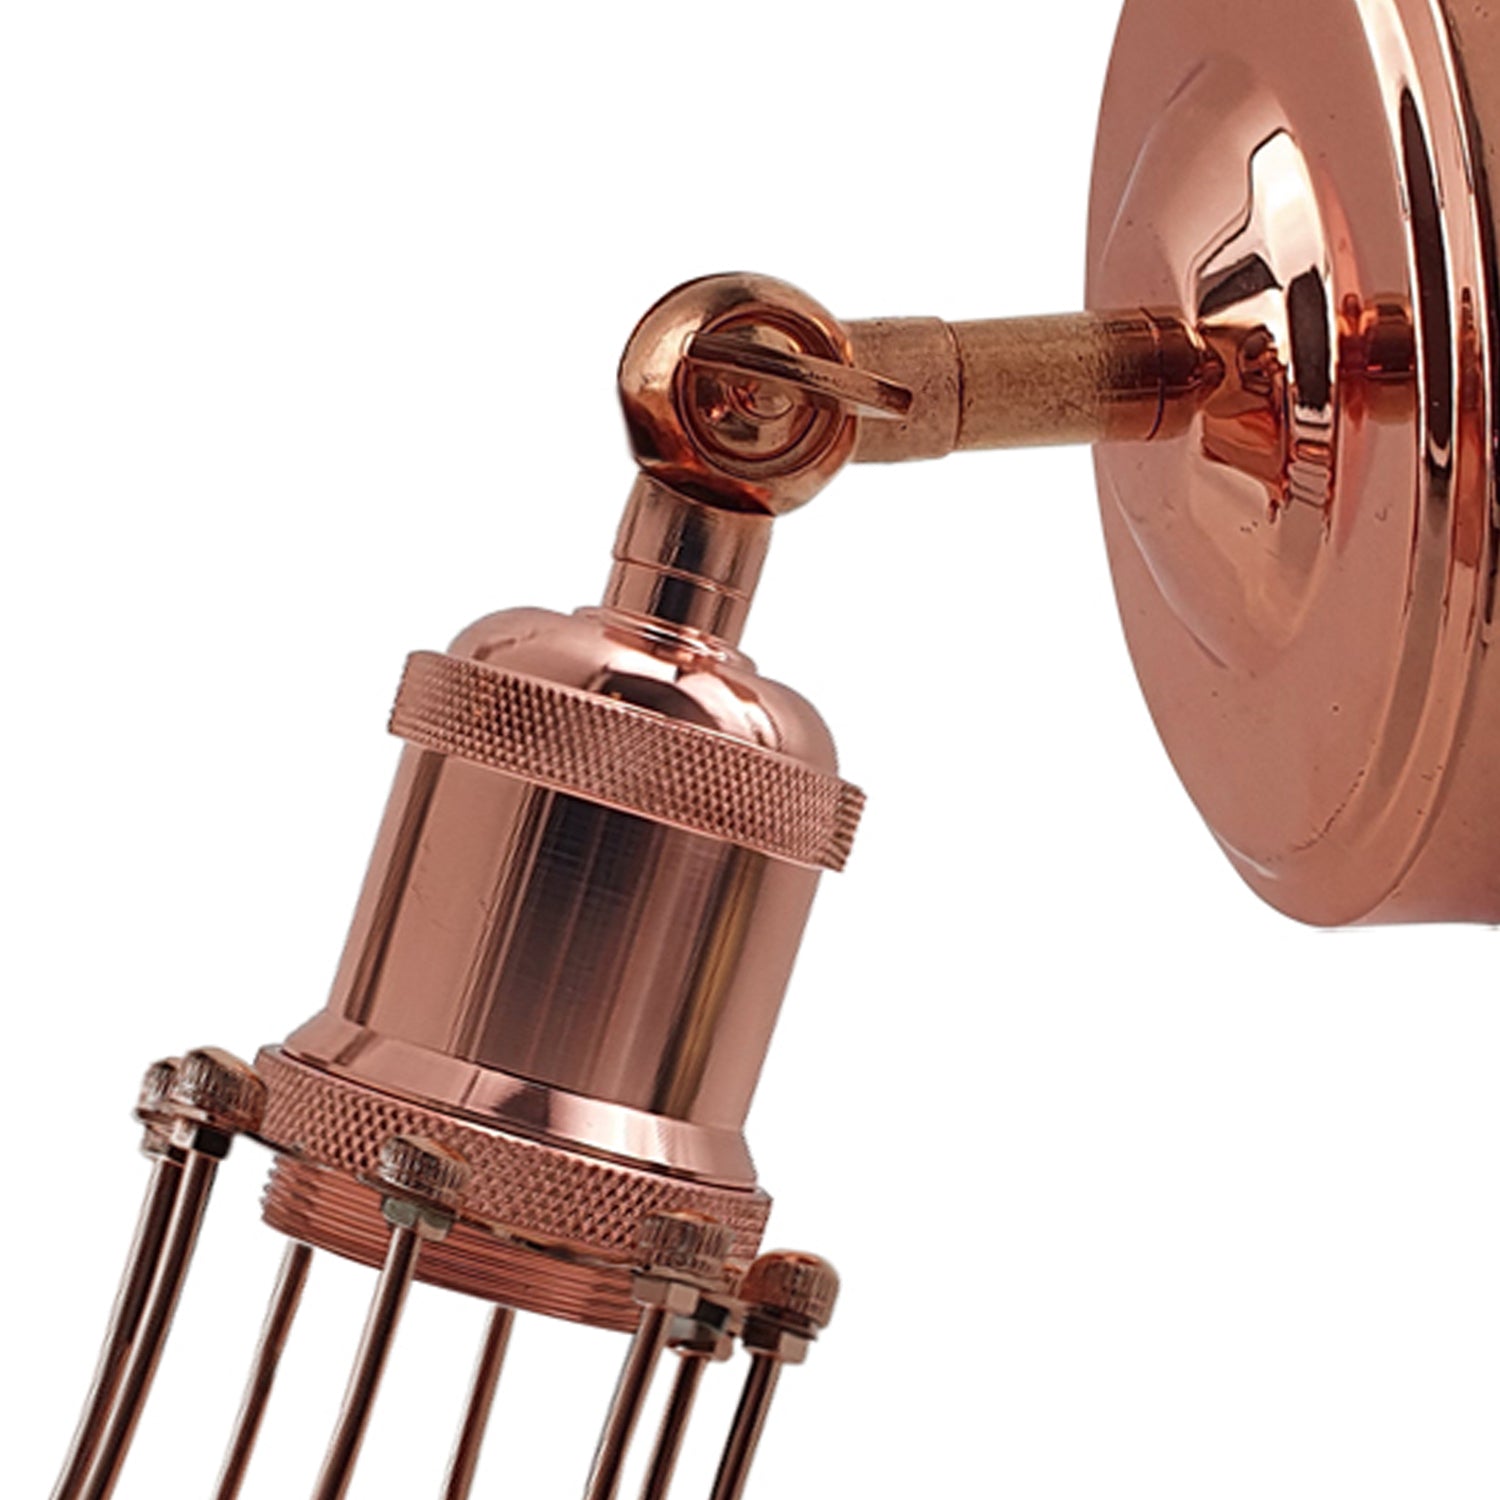 Industrial Vintage Retro Rose Gold Sconce Wall Light Lamp Fitting Fixture~3731 - LEDSone UK Ltd